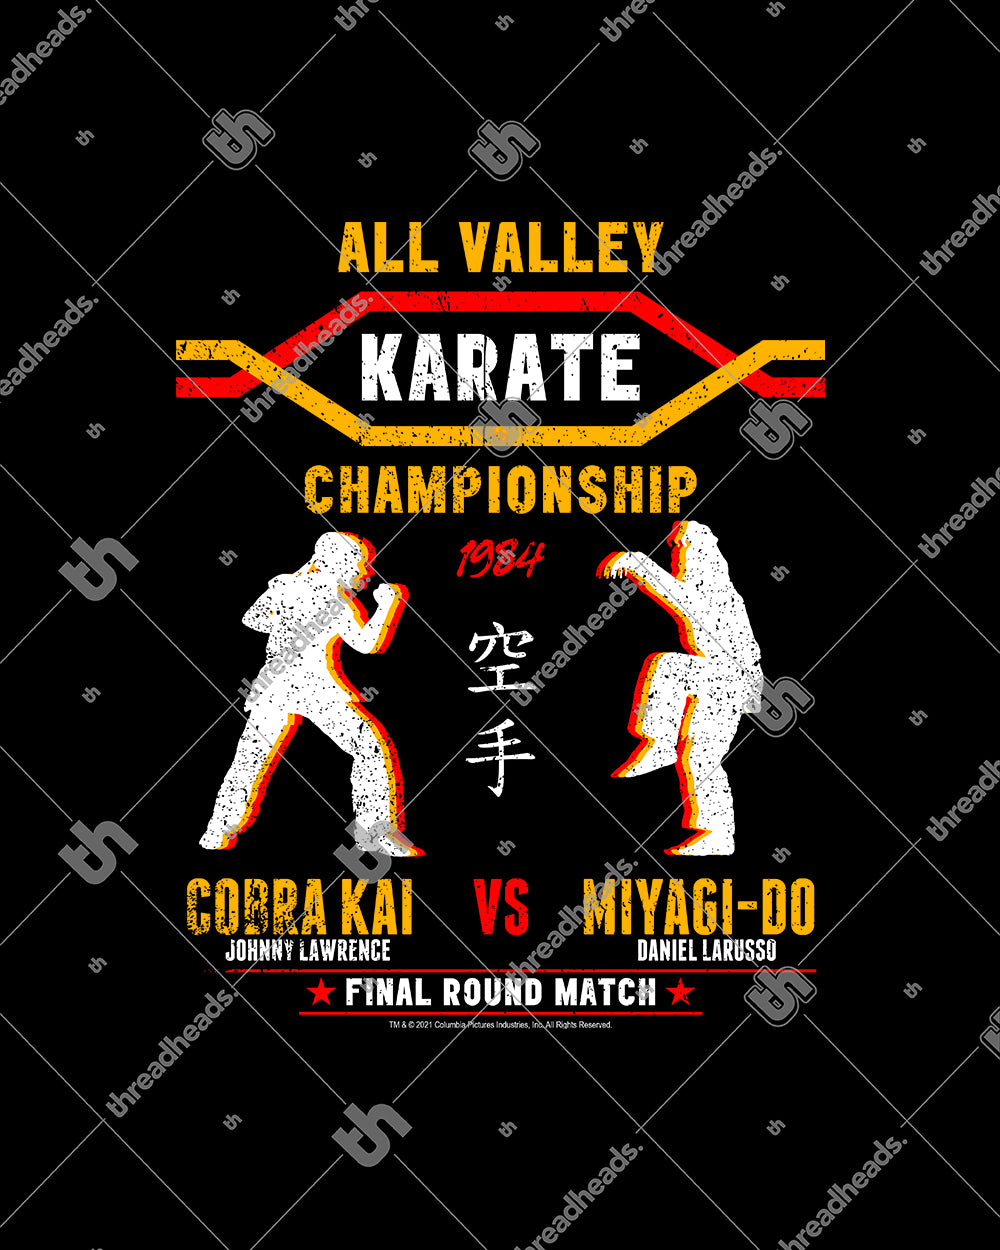 All Valley Karate Championship Tank Australia Online #colour_black